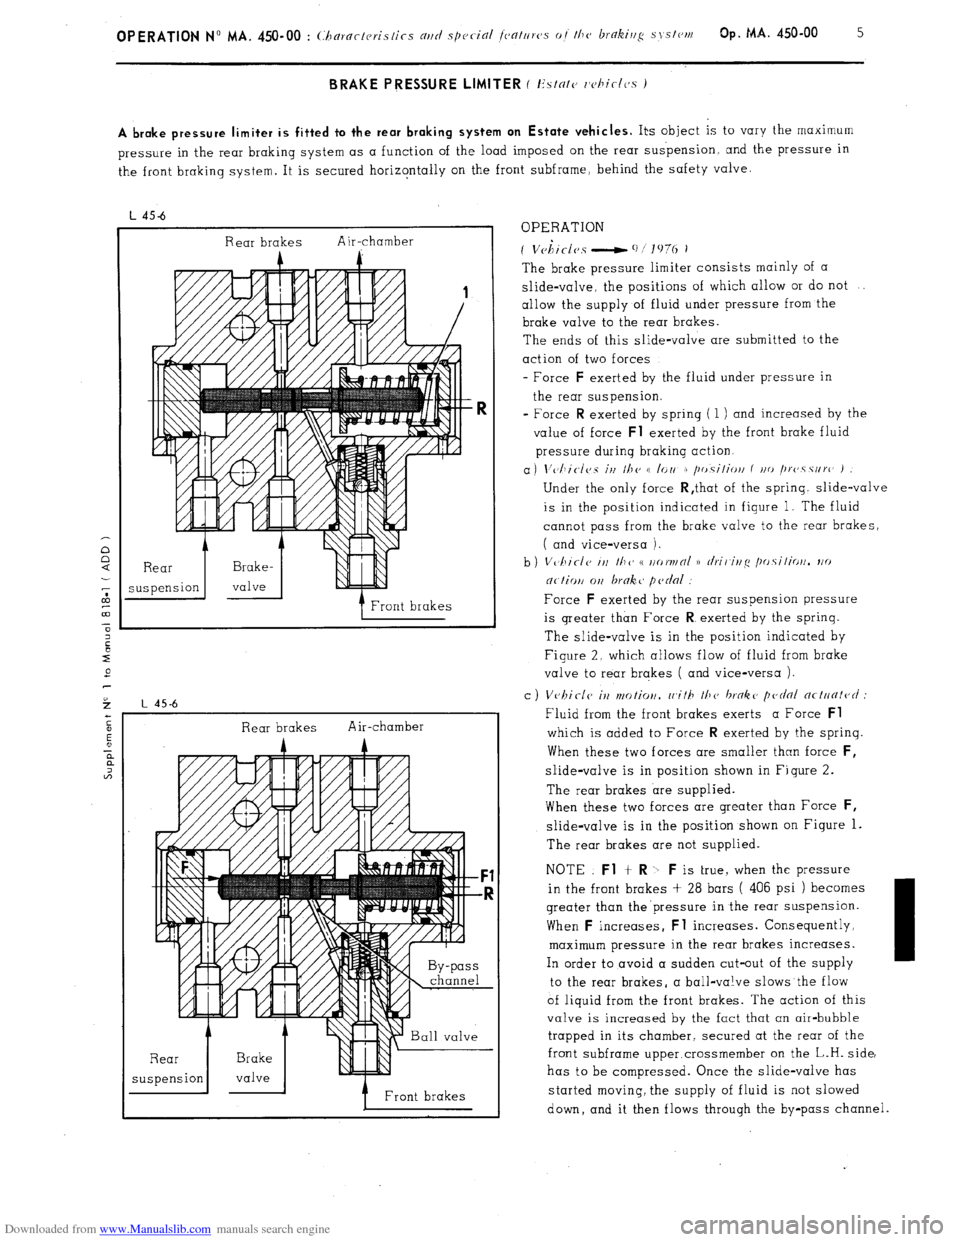 Citroen CX 1985 1.G Workshop Manual Downloaded from www.Manualslib.com manuals search engine OPERATION No MA. 450-00 : Ch nrnclcrislics ortd sp~~c-i~l (c~c~trlrc>s 01 the hokiug S SI~IN Op. MA. 450.00 5 
A brake pressure limiter is fitt